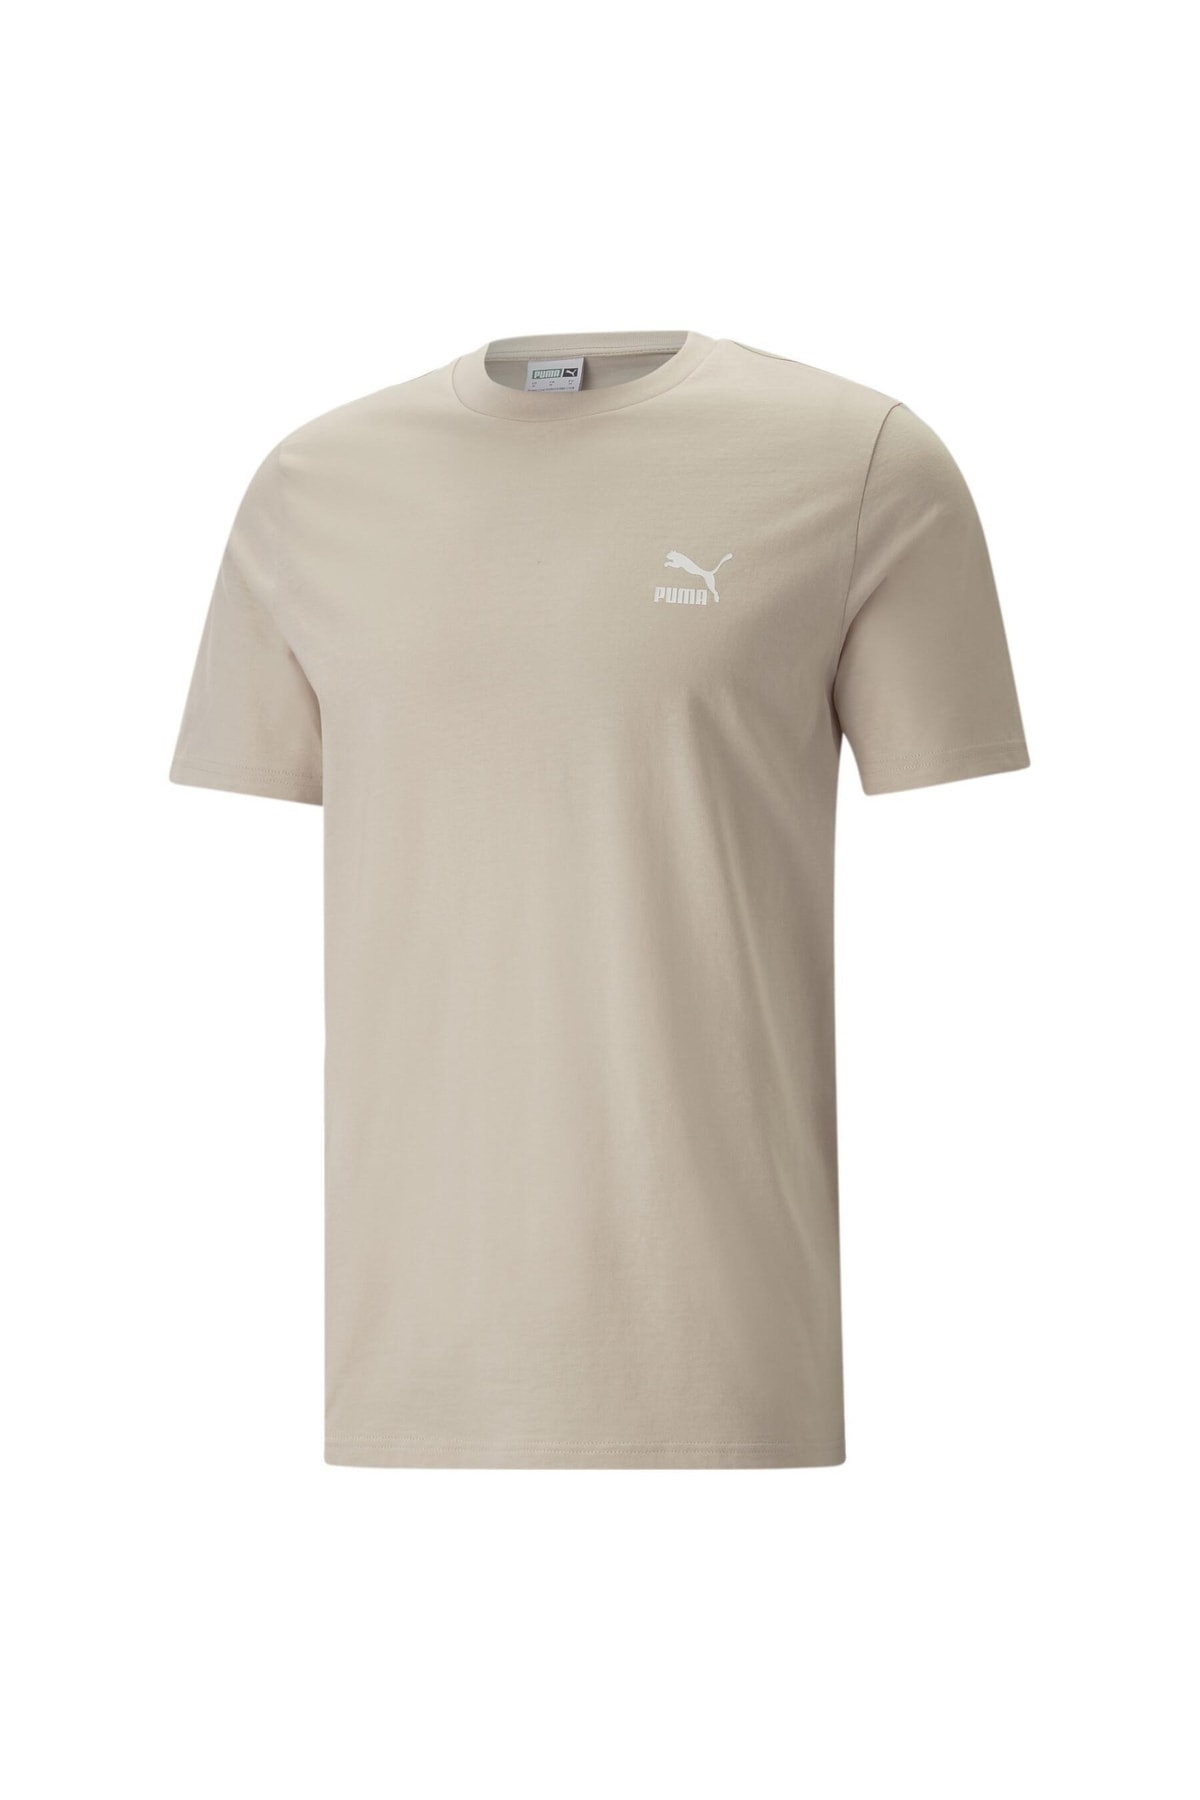 Puma Sport T-Shirt Beige Regular Fit